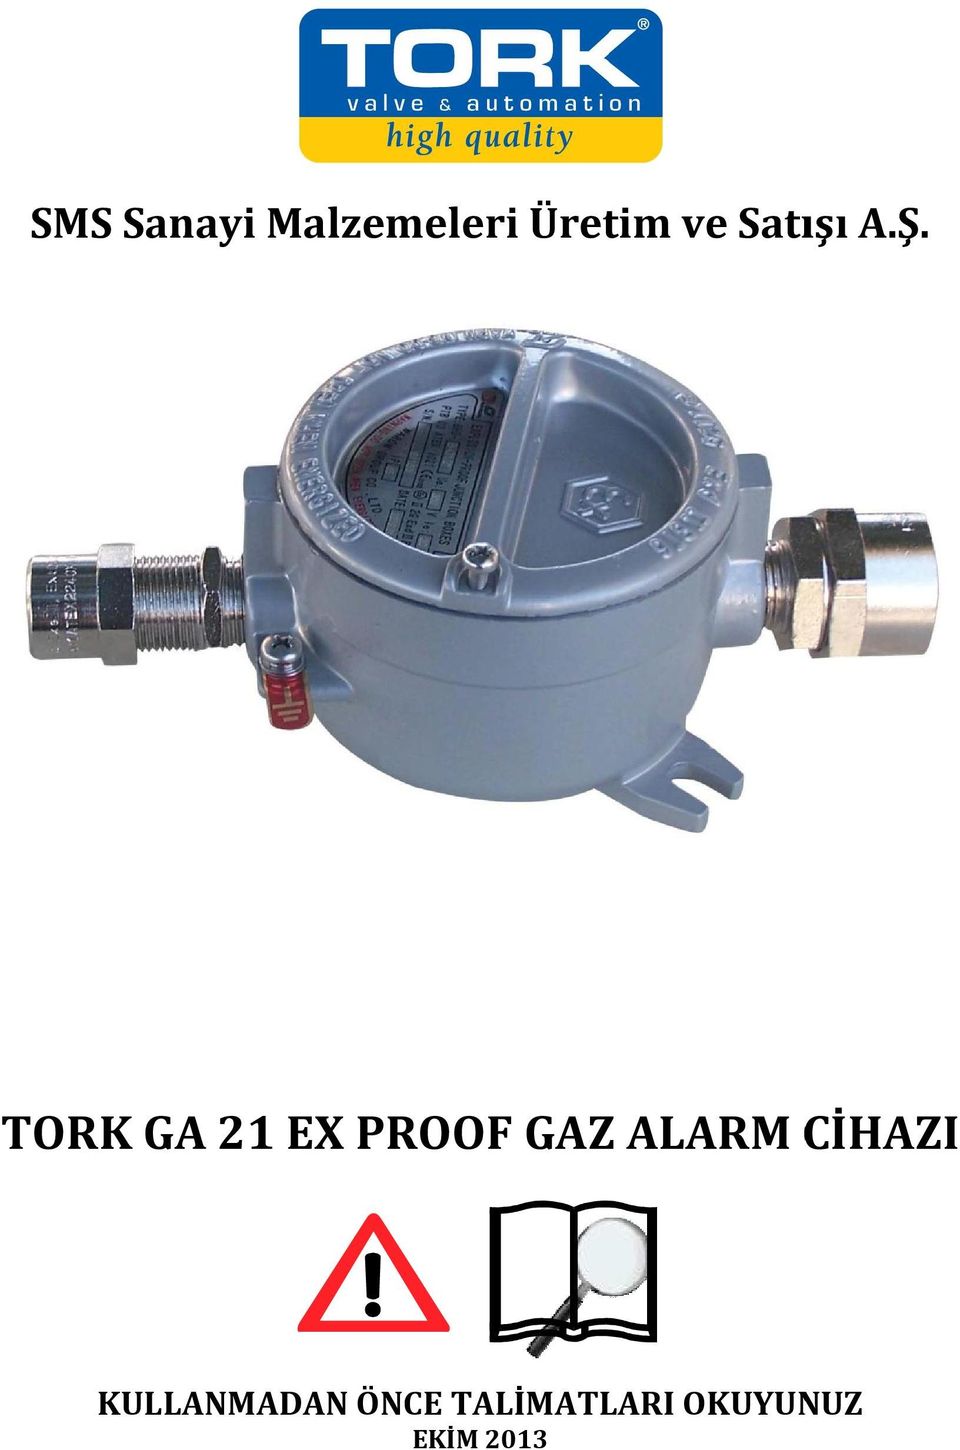 TORK GA 21 EX PROOF GAZ ALARM